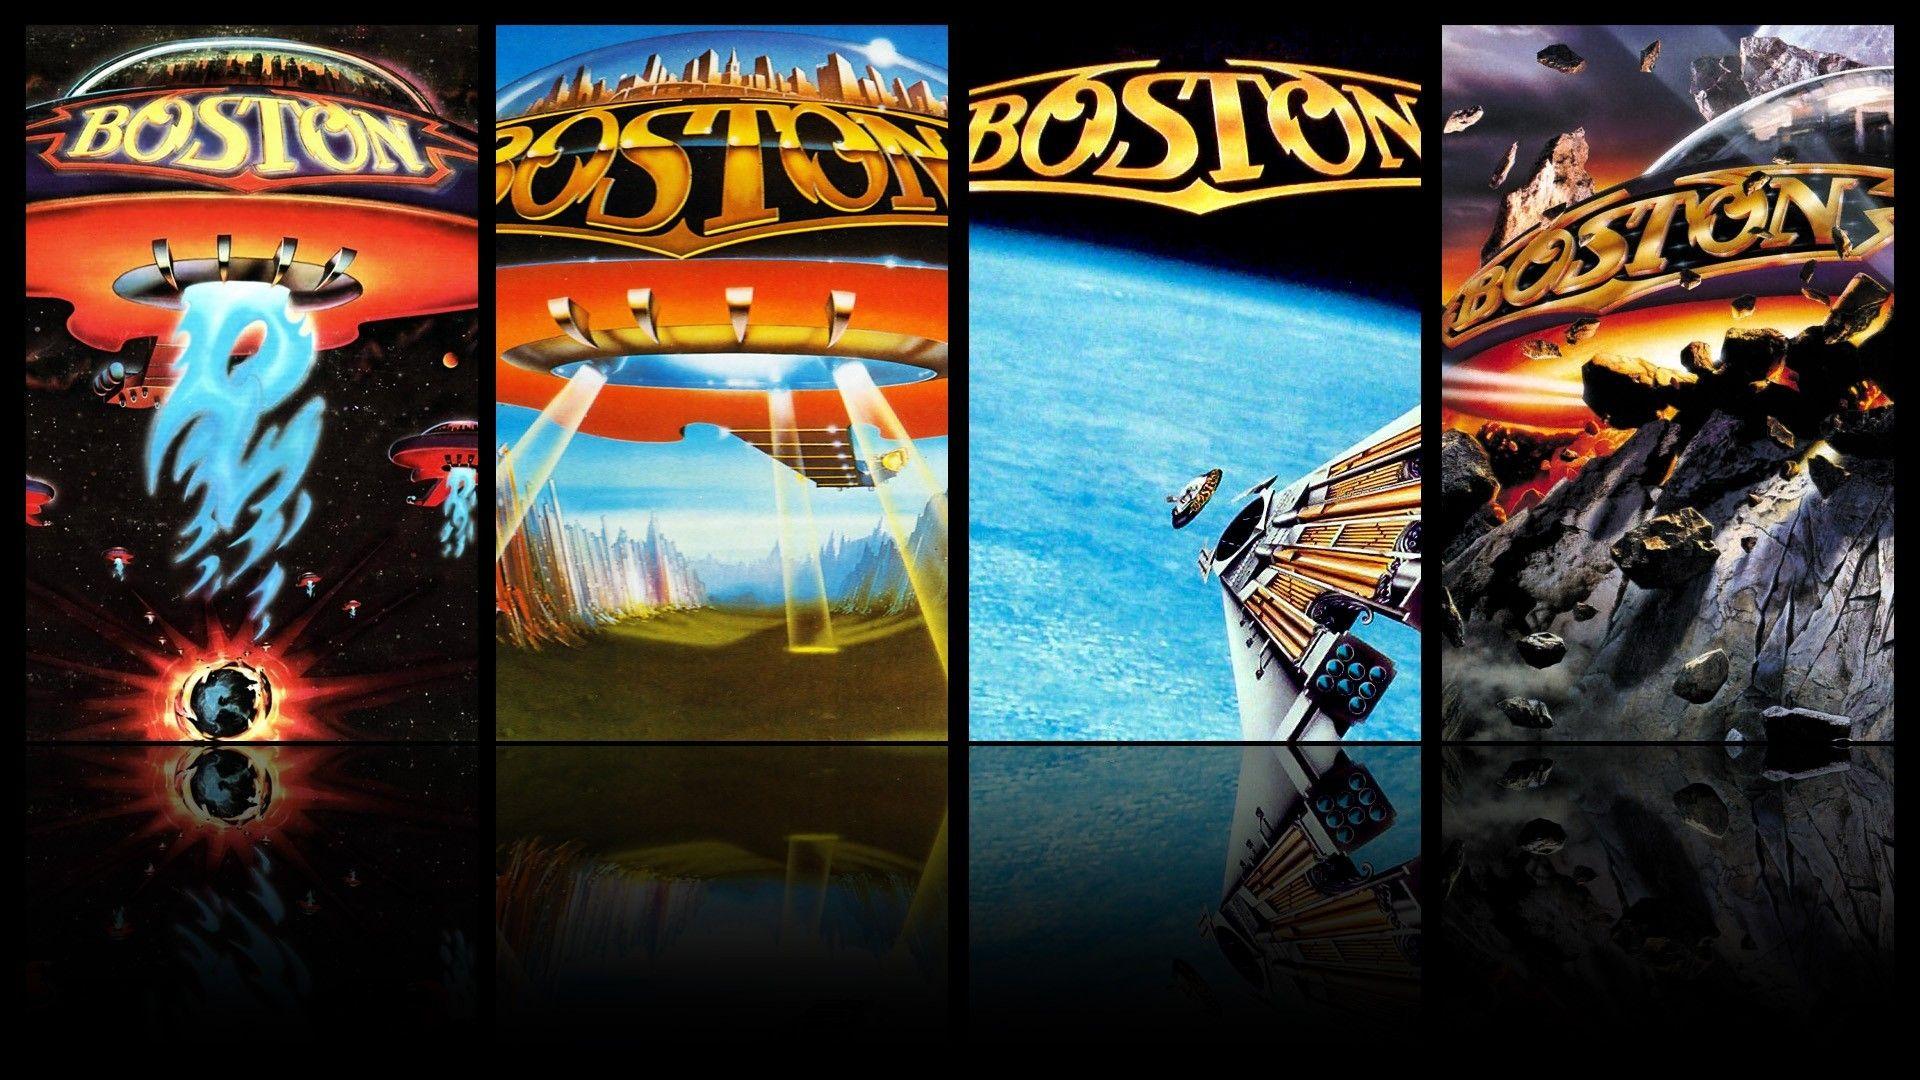 Boston The Band Wallpaper. Band wallpaper, Boston band, Boston album